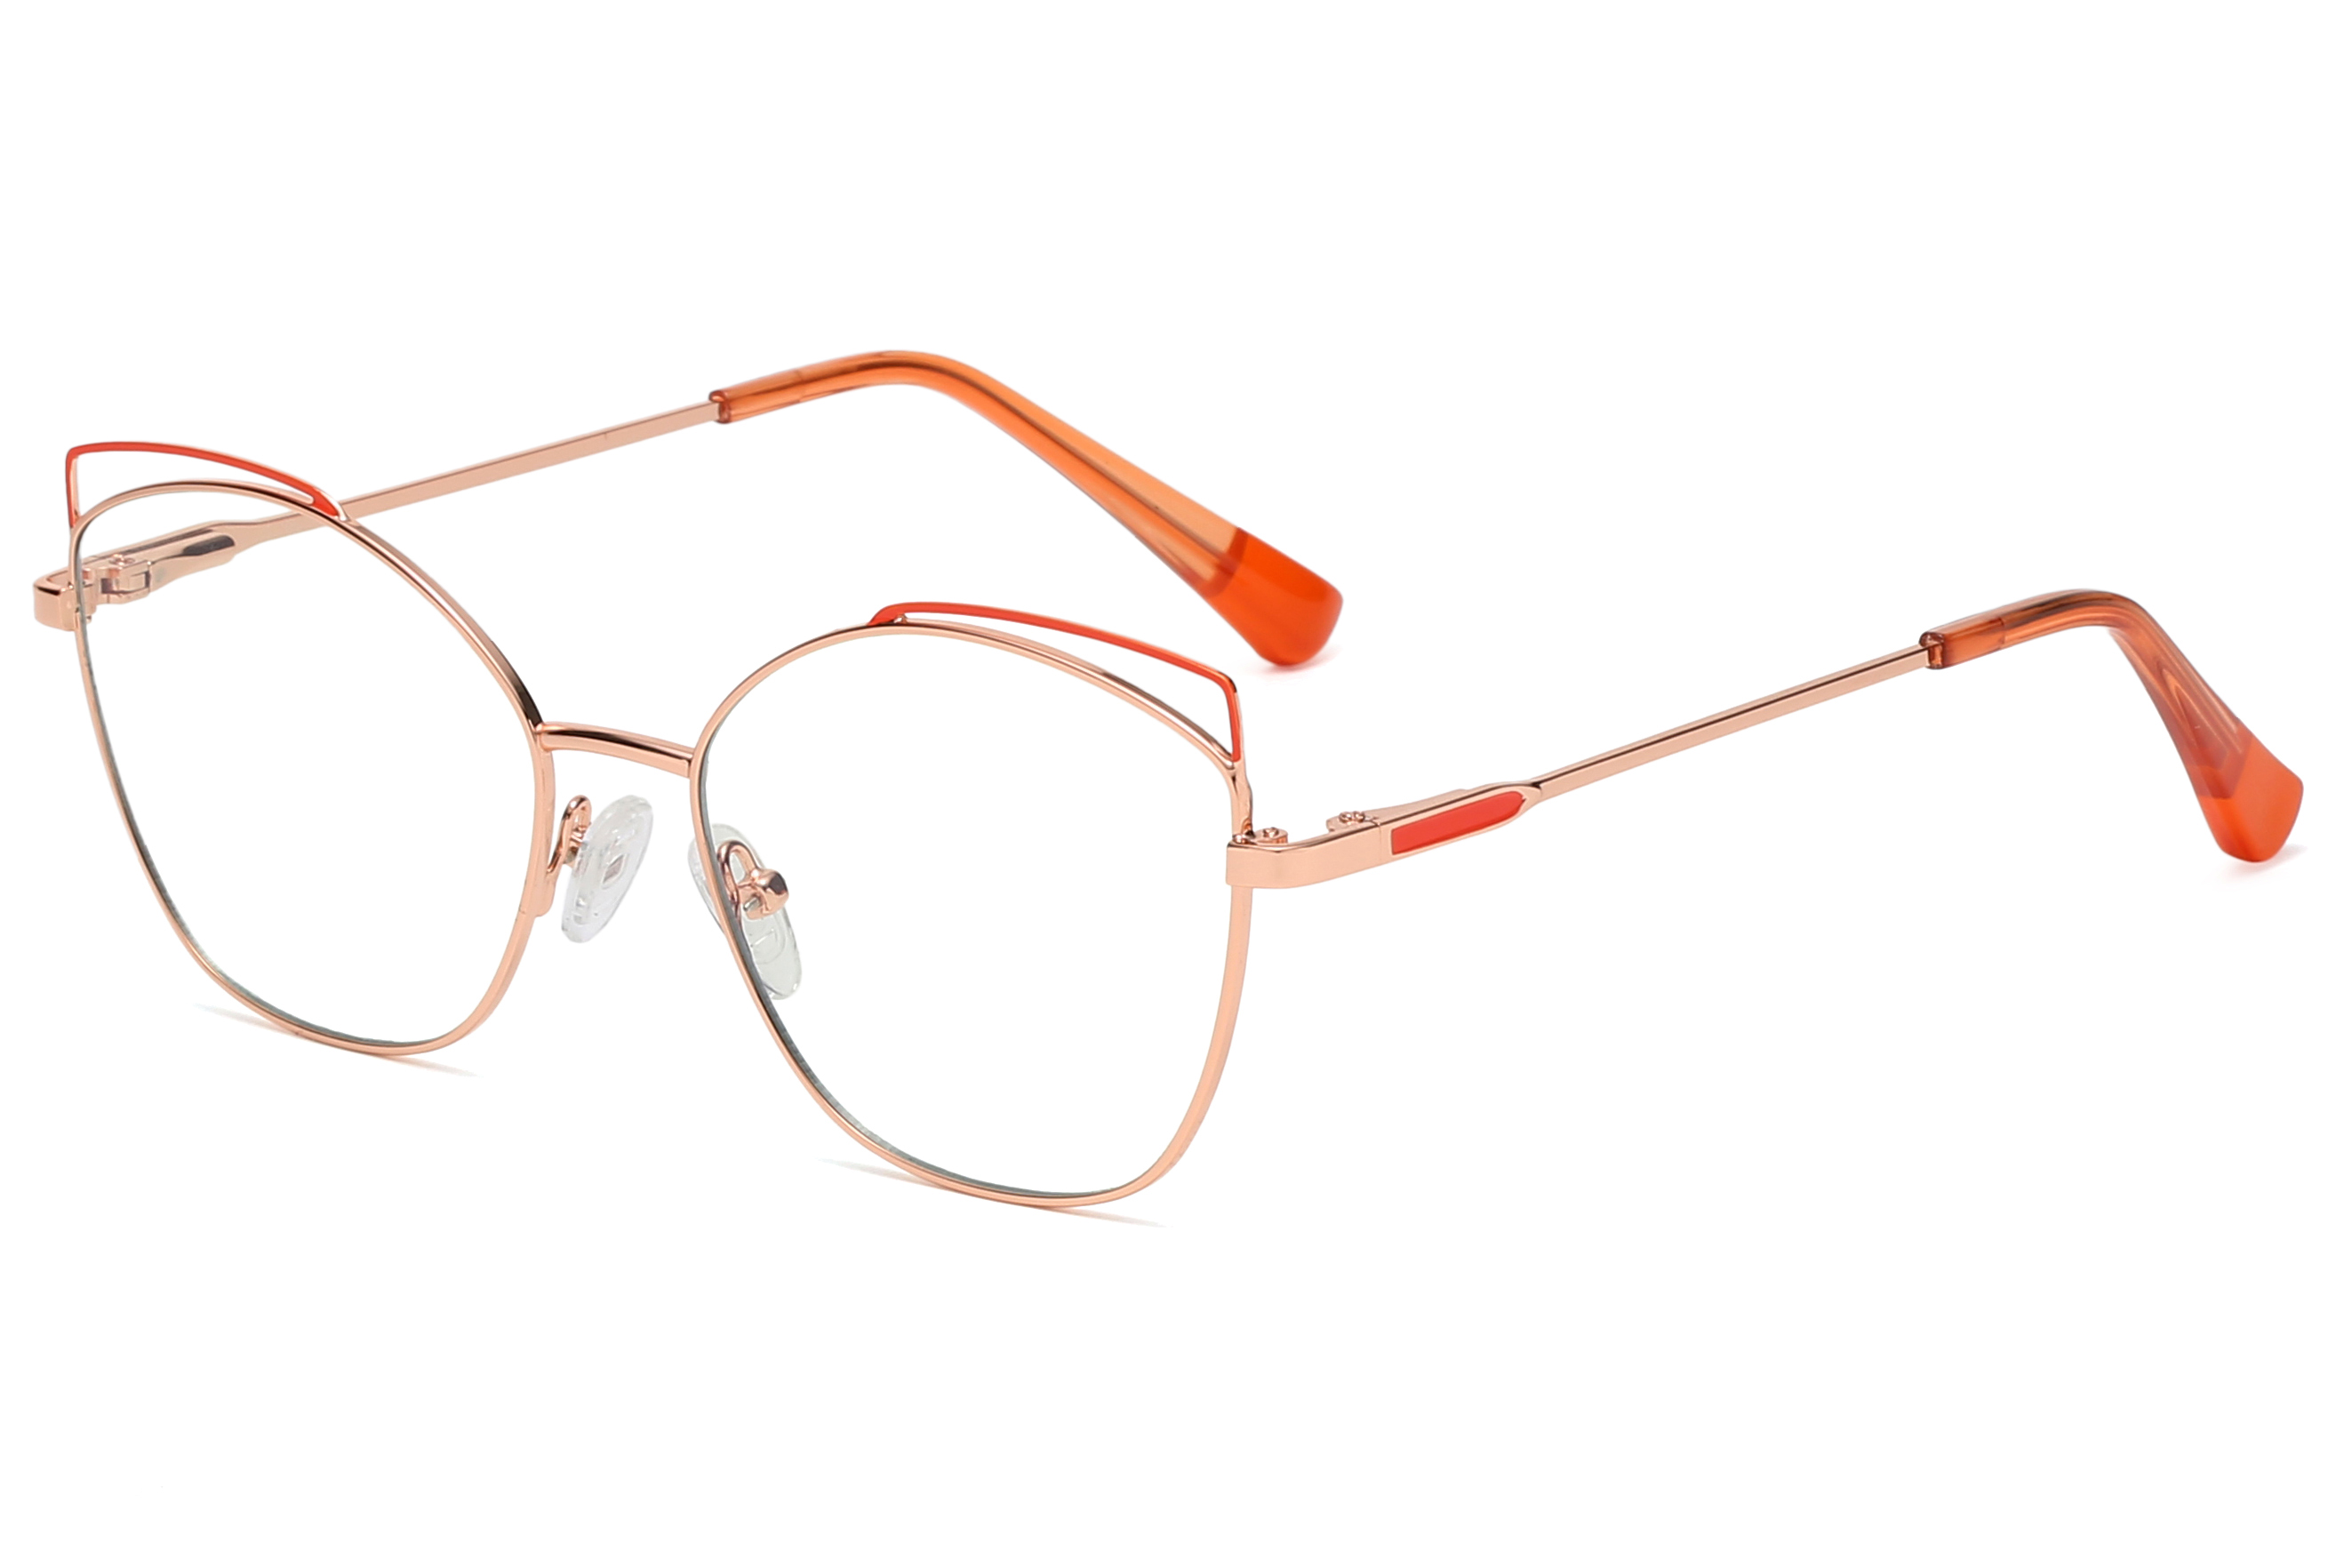 INS HOT Womans Fashion Optical frame Cat Eye Vintage Eyeglasses